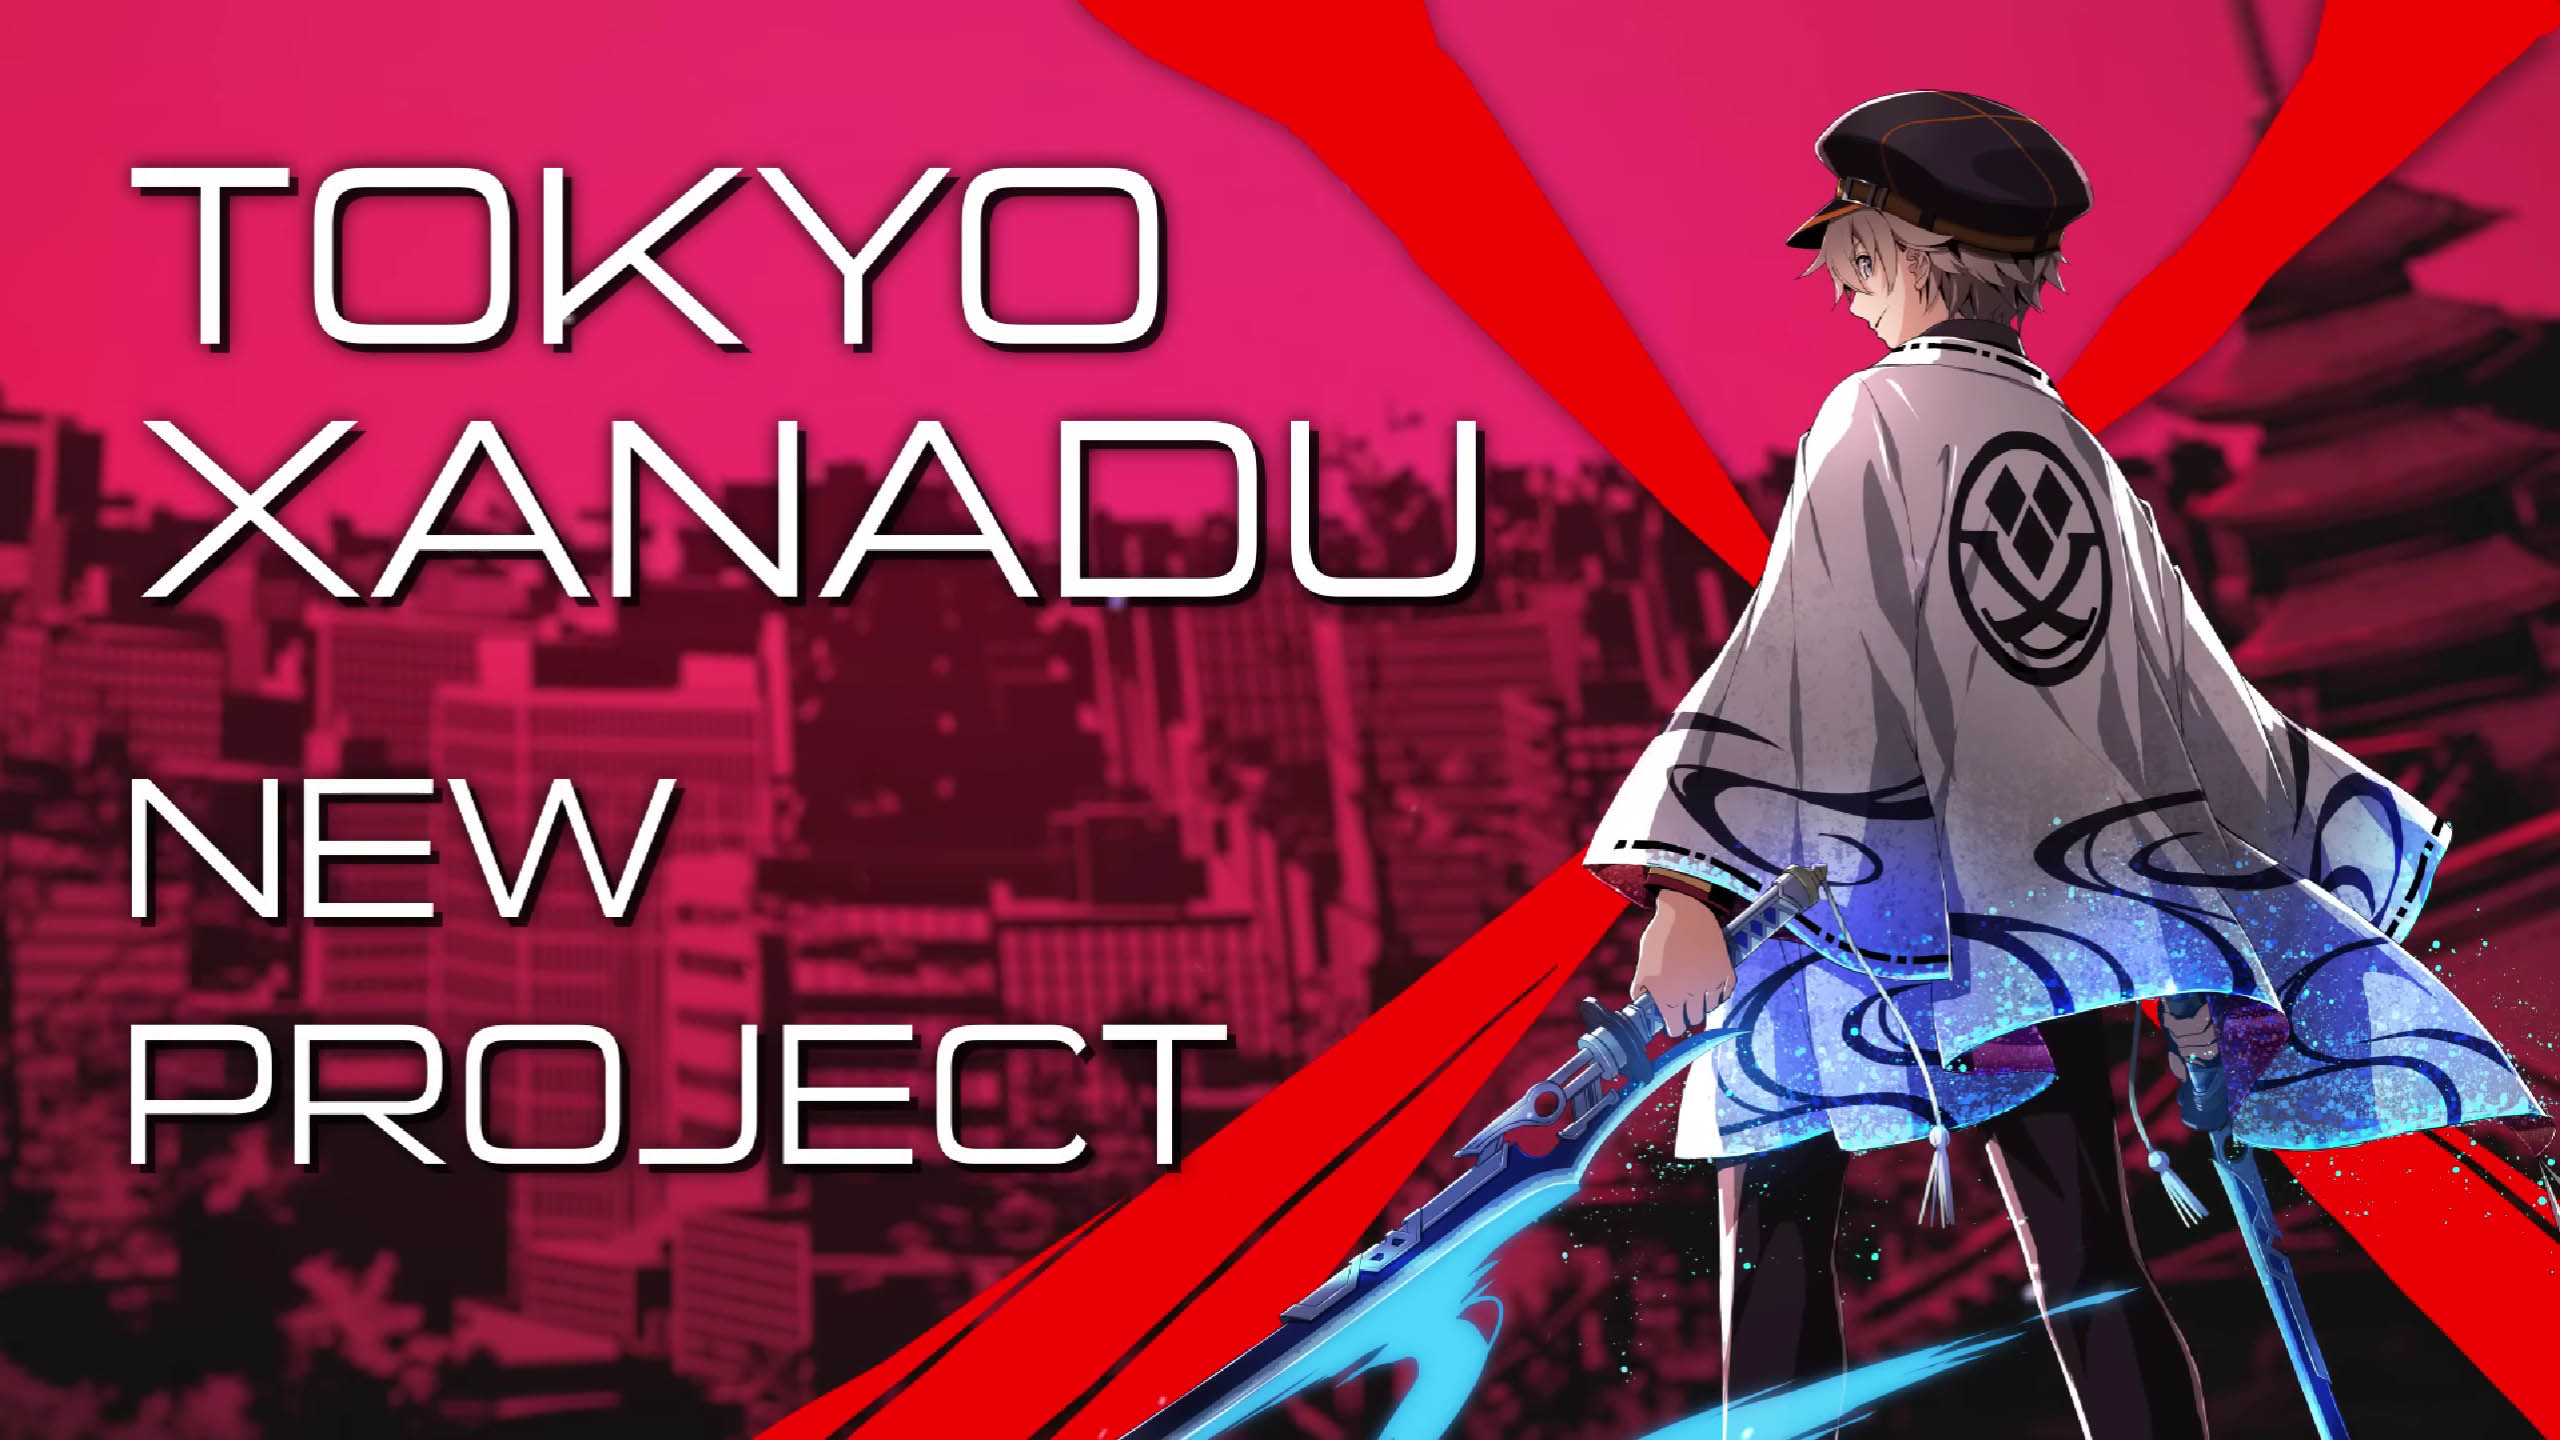 Tokyo Xanadu New Project